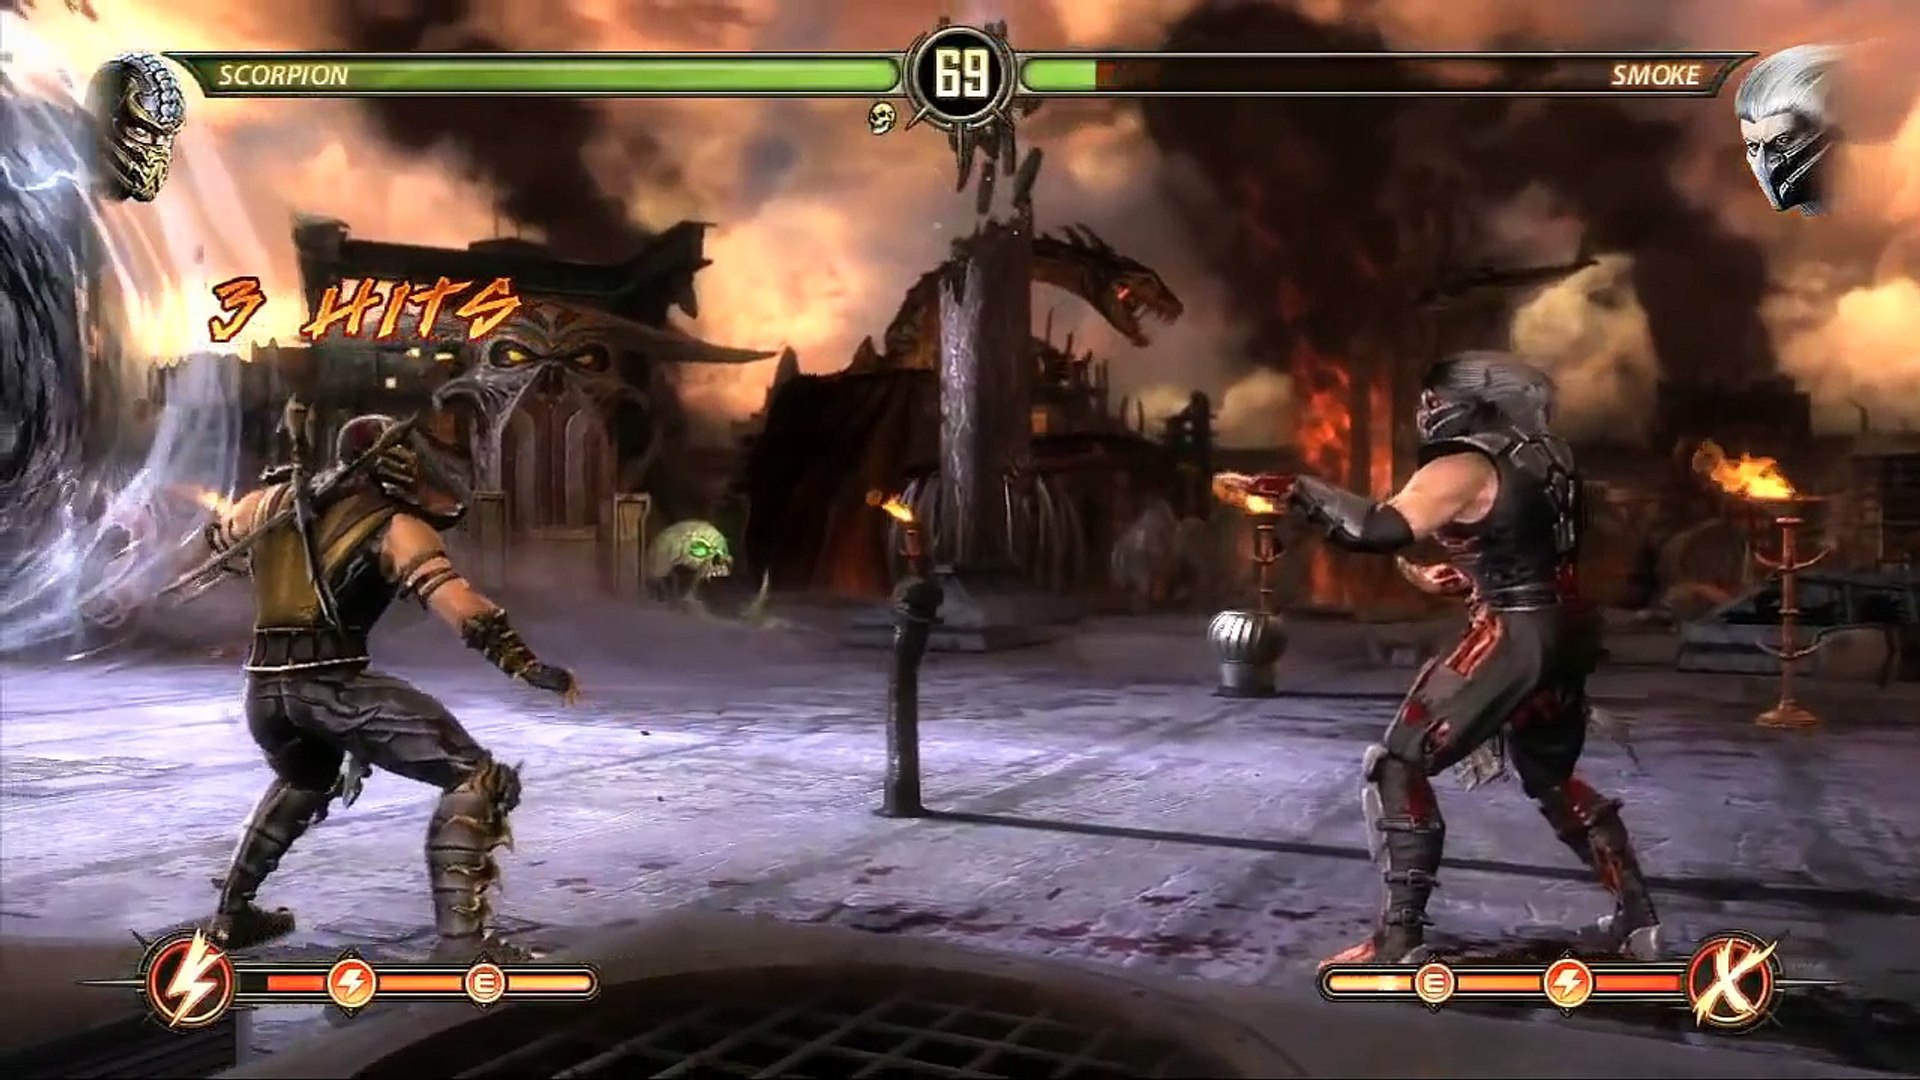 One of my favorite fatalities from Mortal Kombat 9 is Sub-Zero